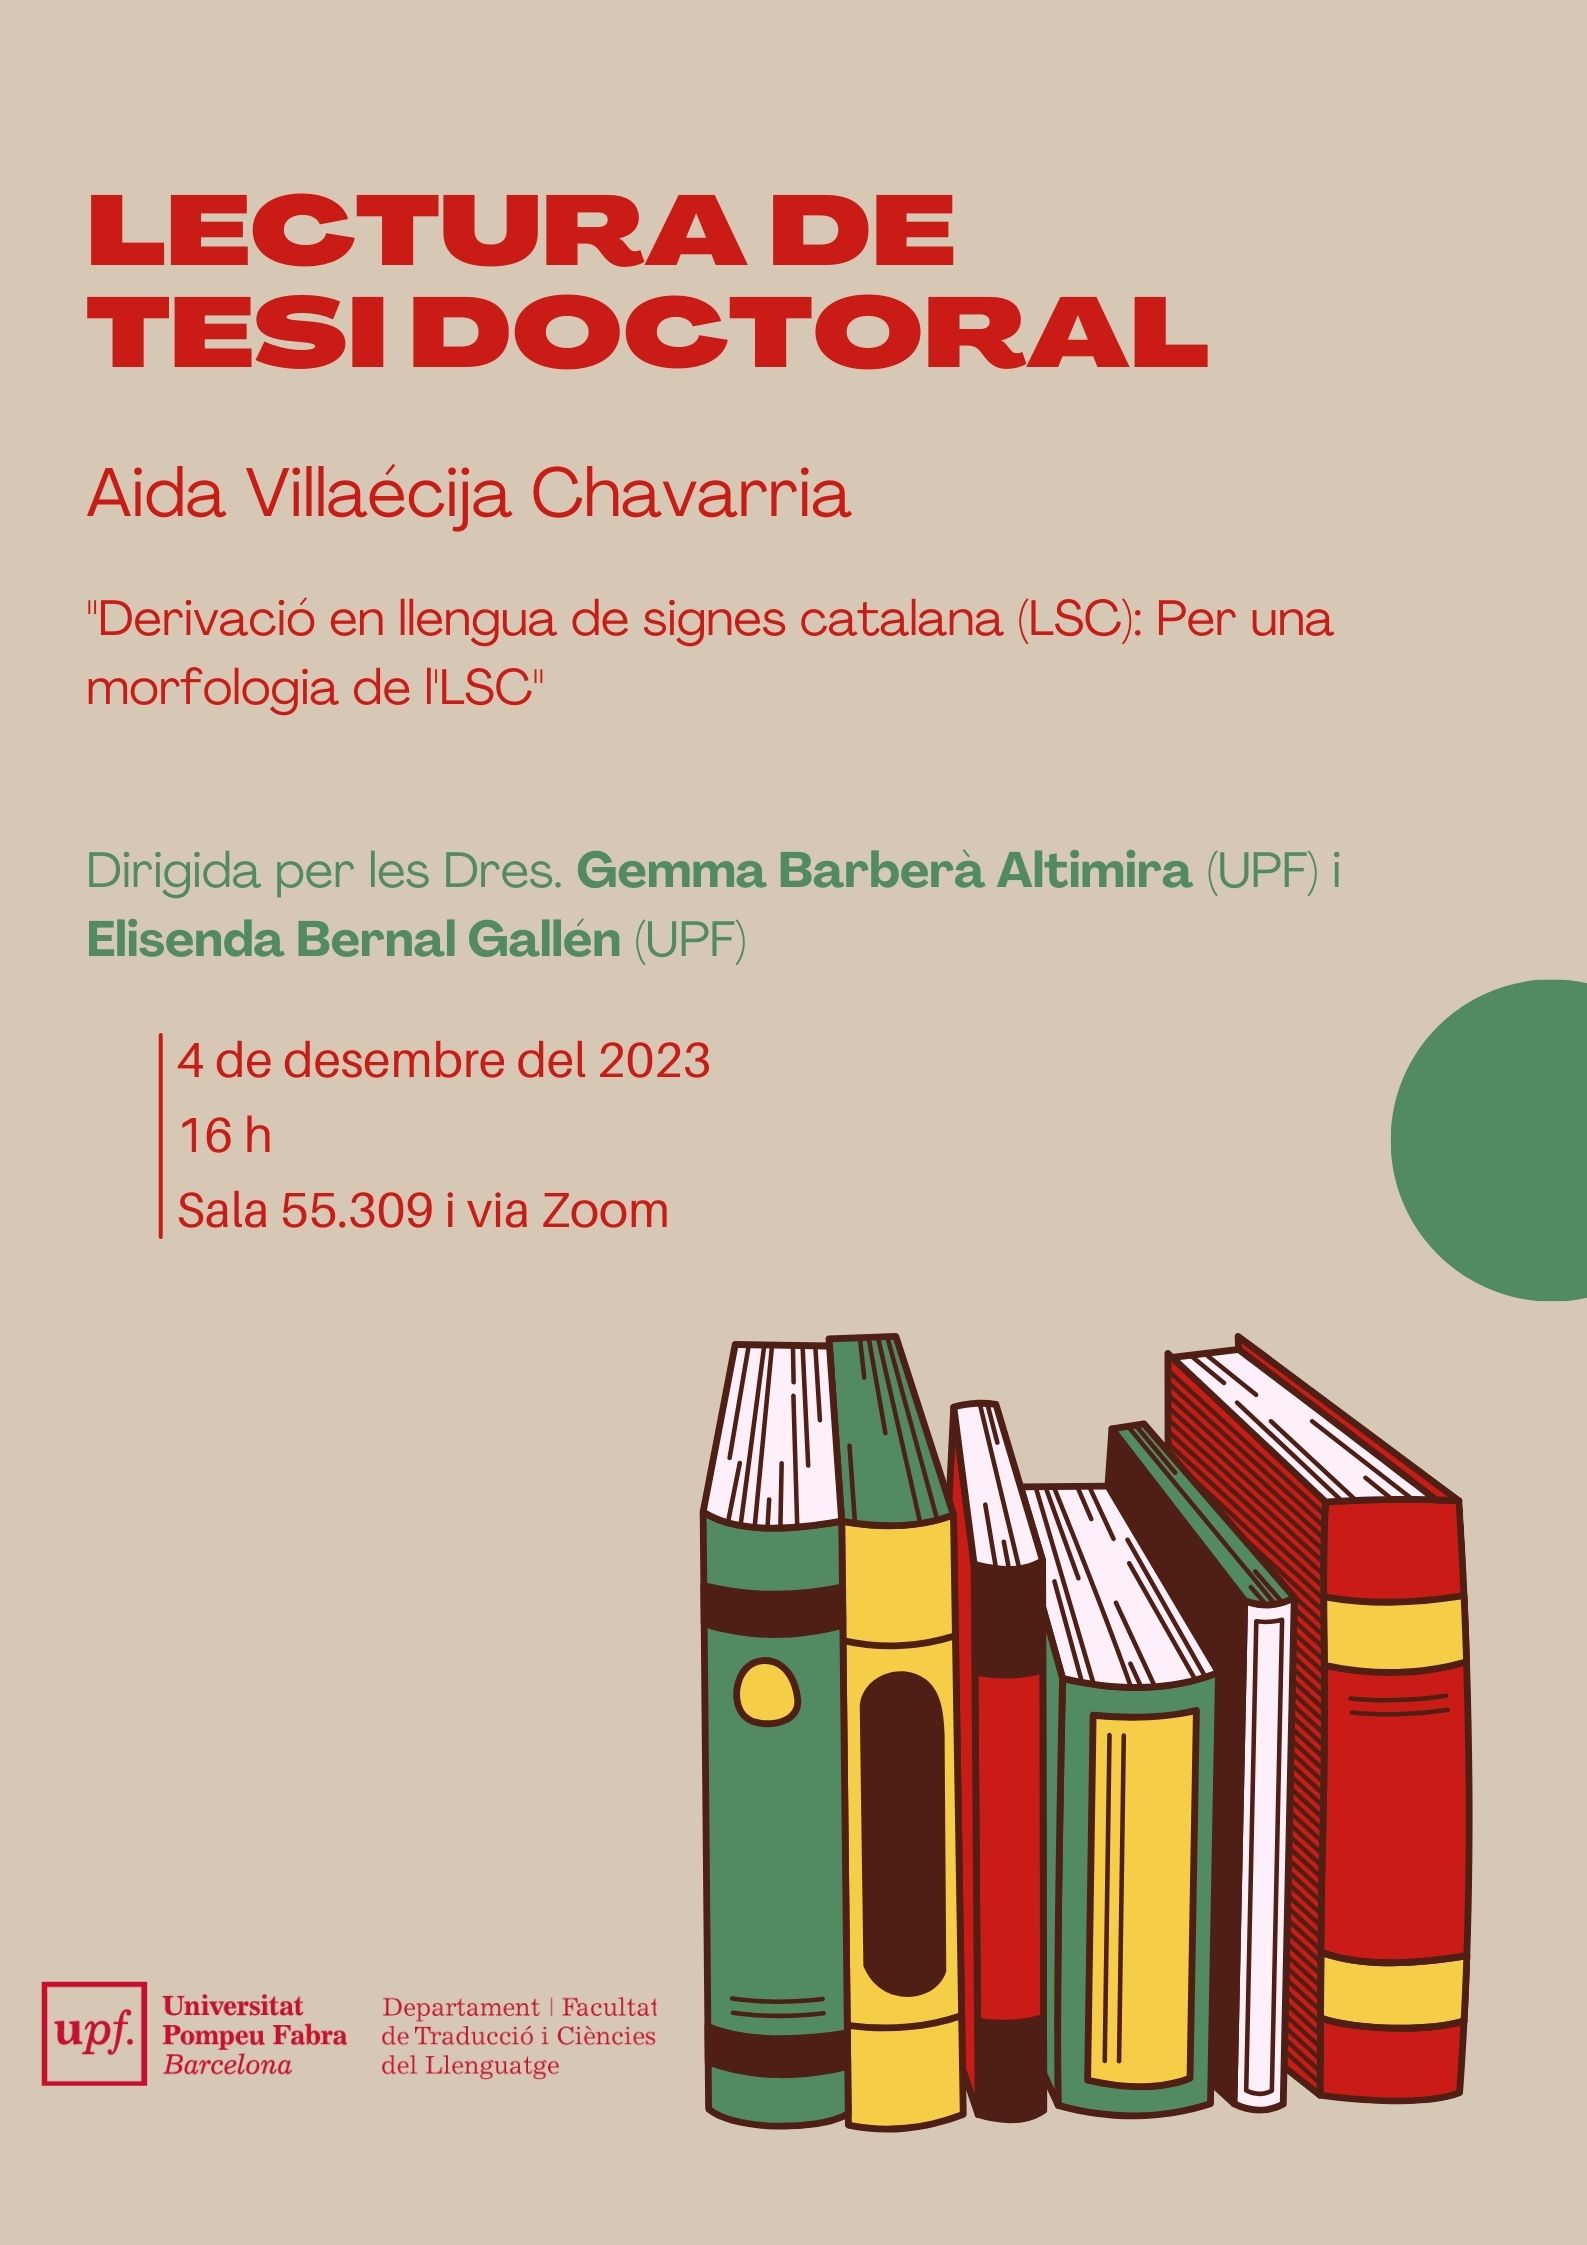 04/12/2023 Lectura de la tesi doctoral Aida Villaécija Chavarria, a les 16.00 hores